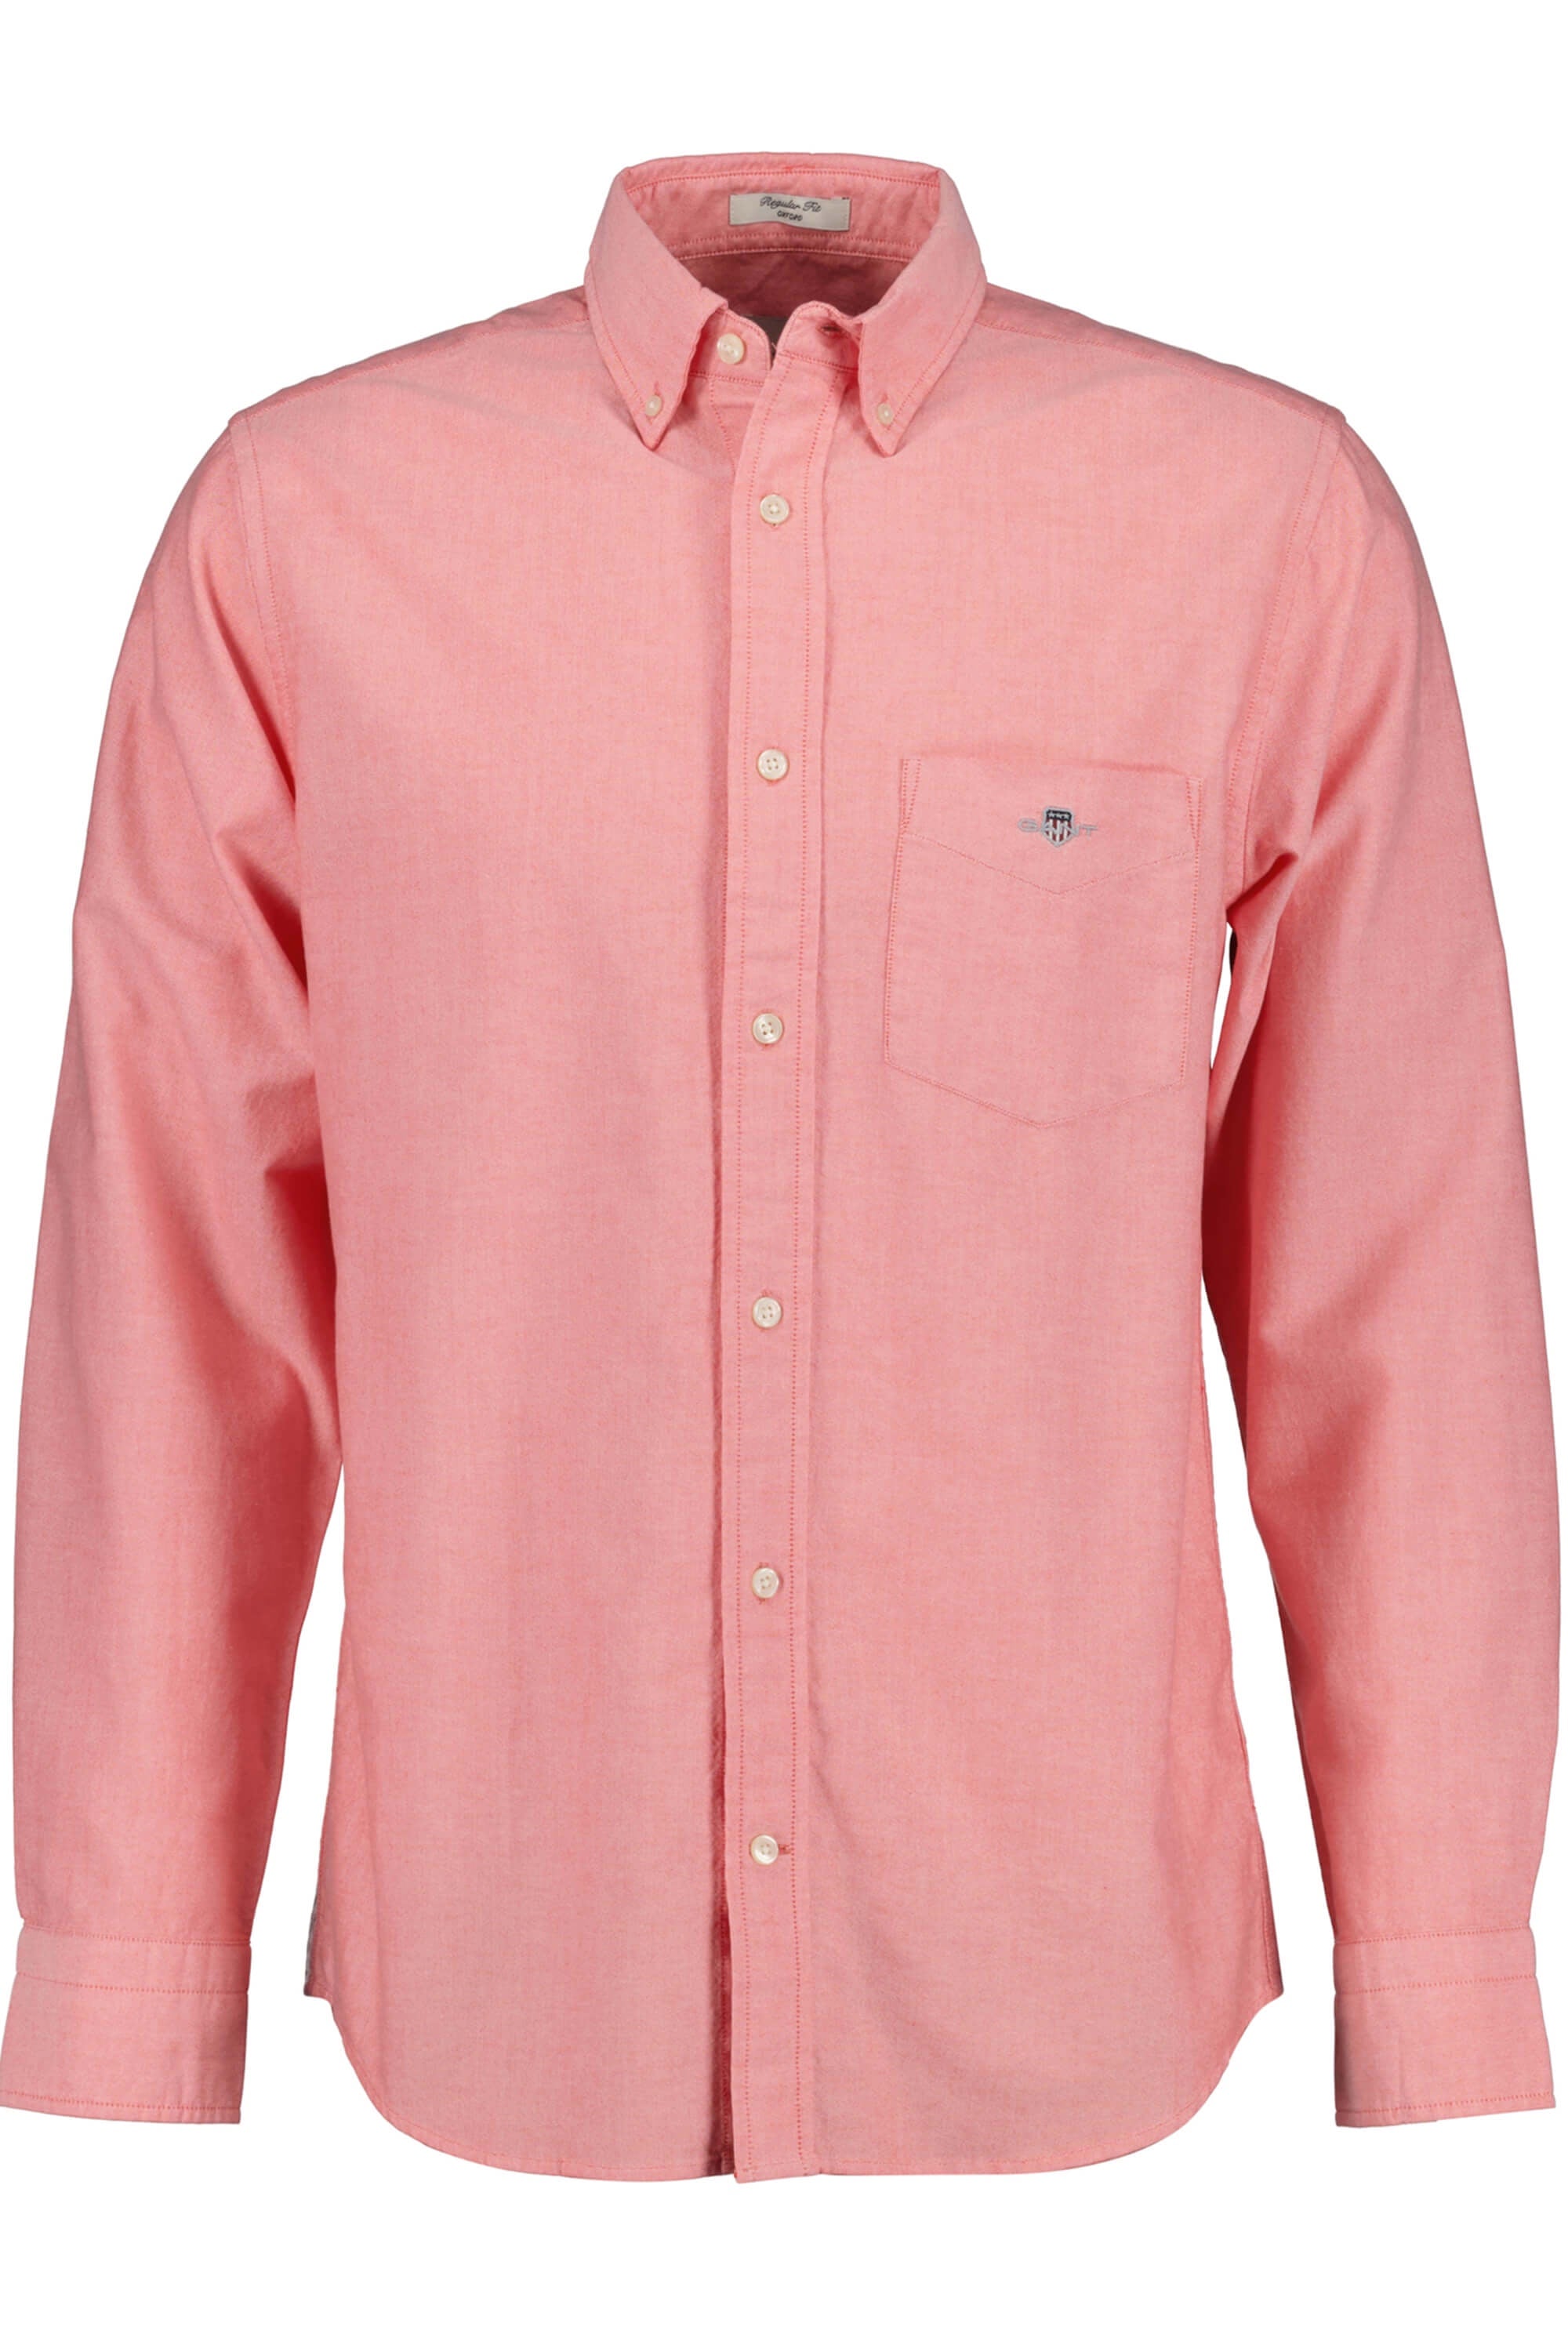 Gant Reg Oxford Shirt Sunset Pink